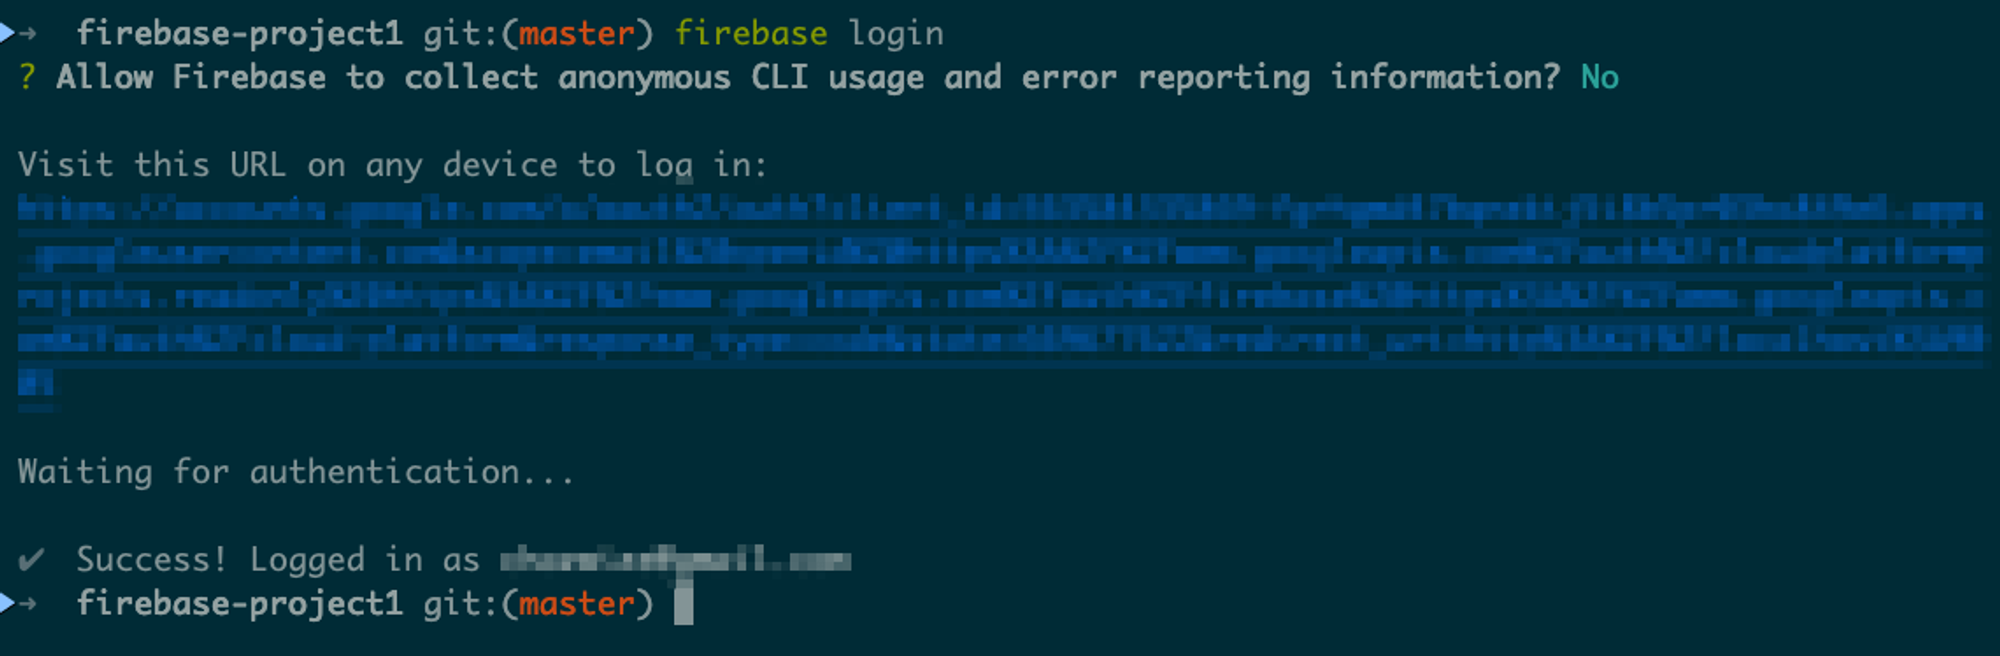 firebase login 이 정상적으로 완료된 모습.